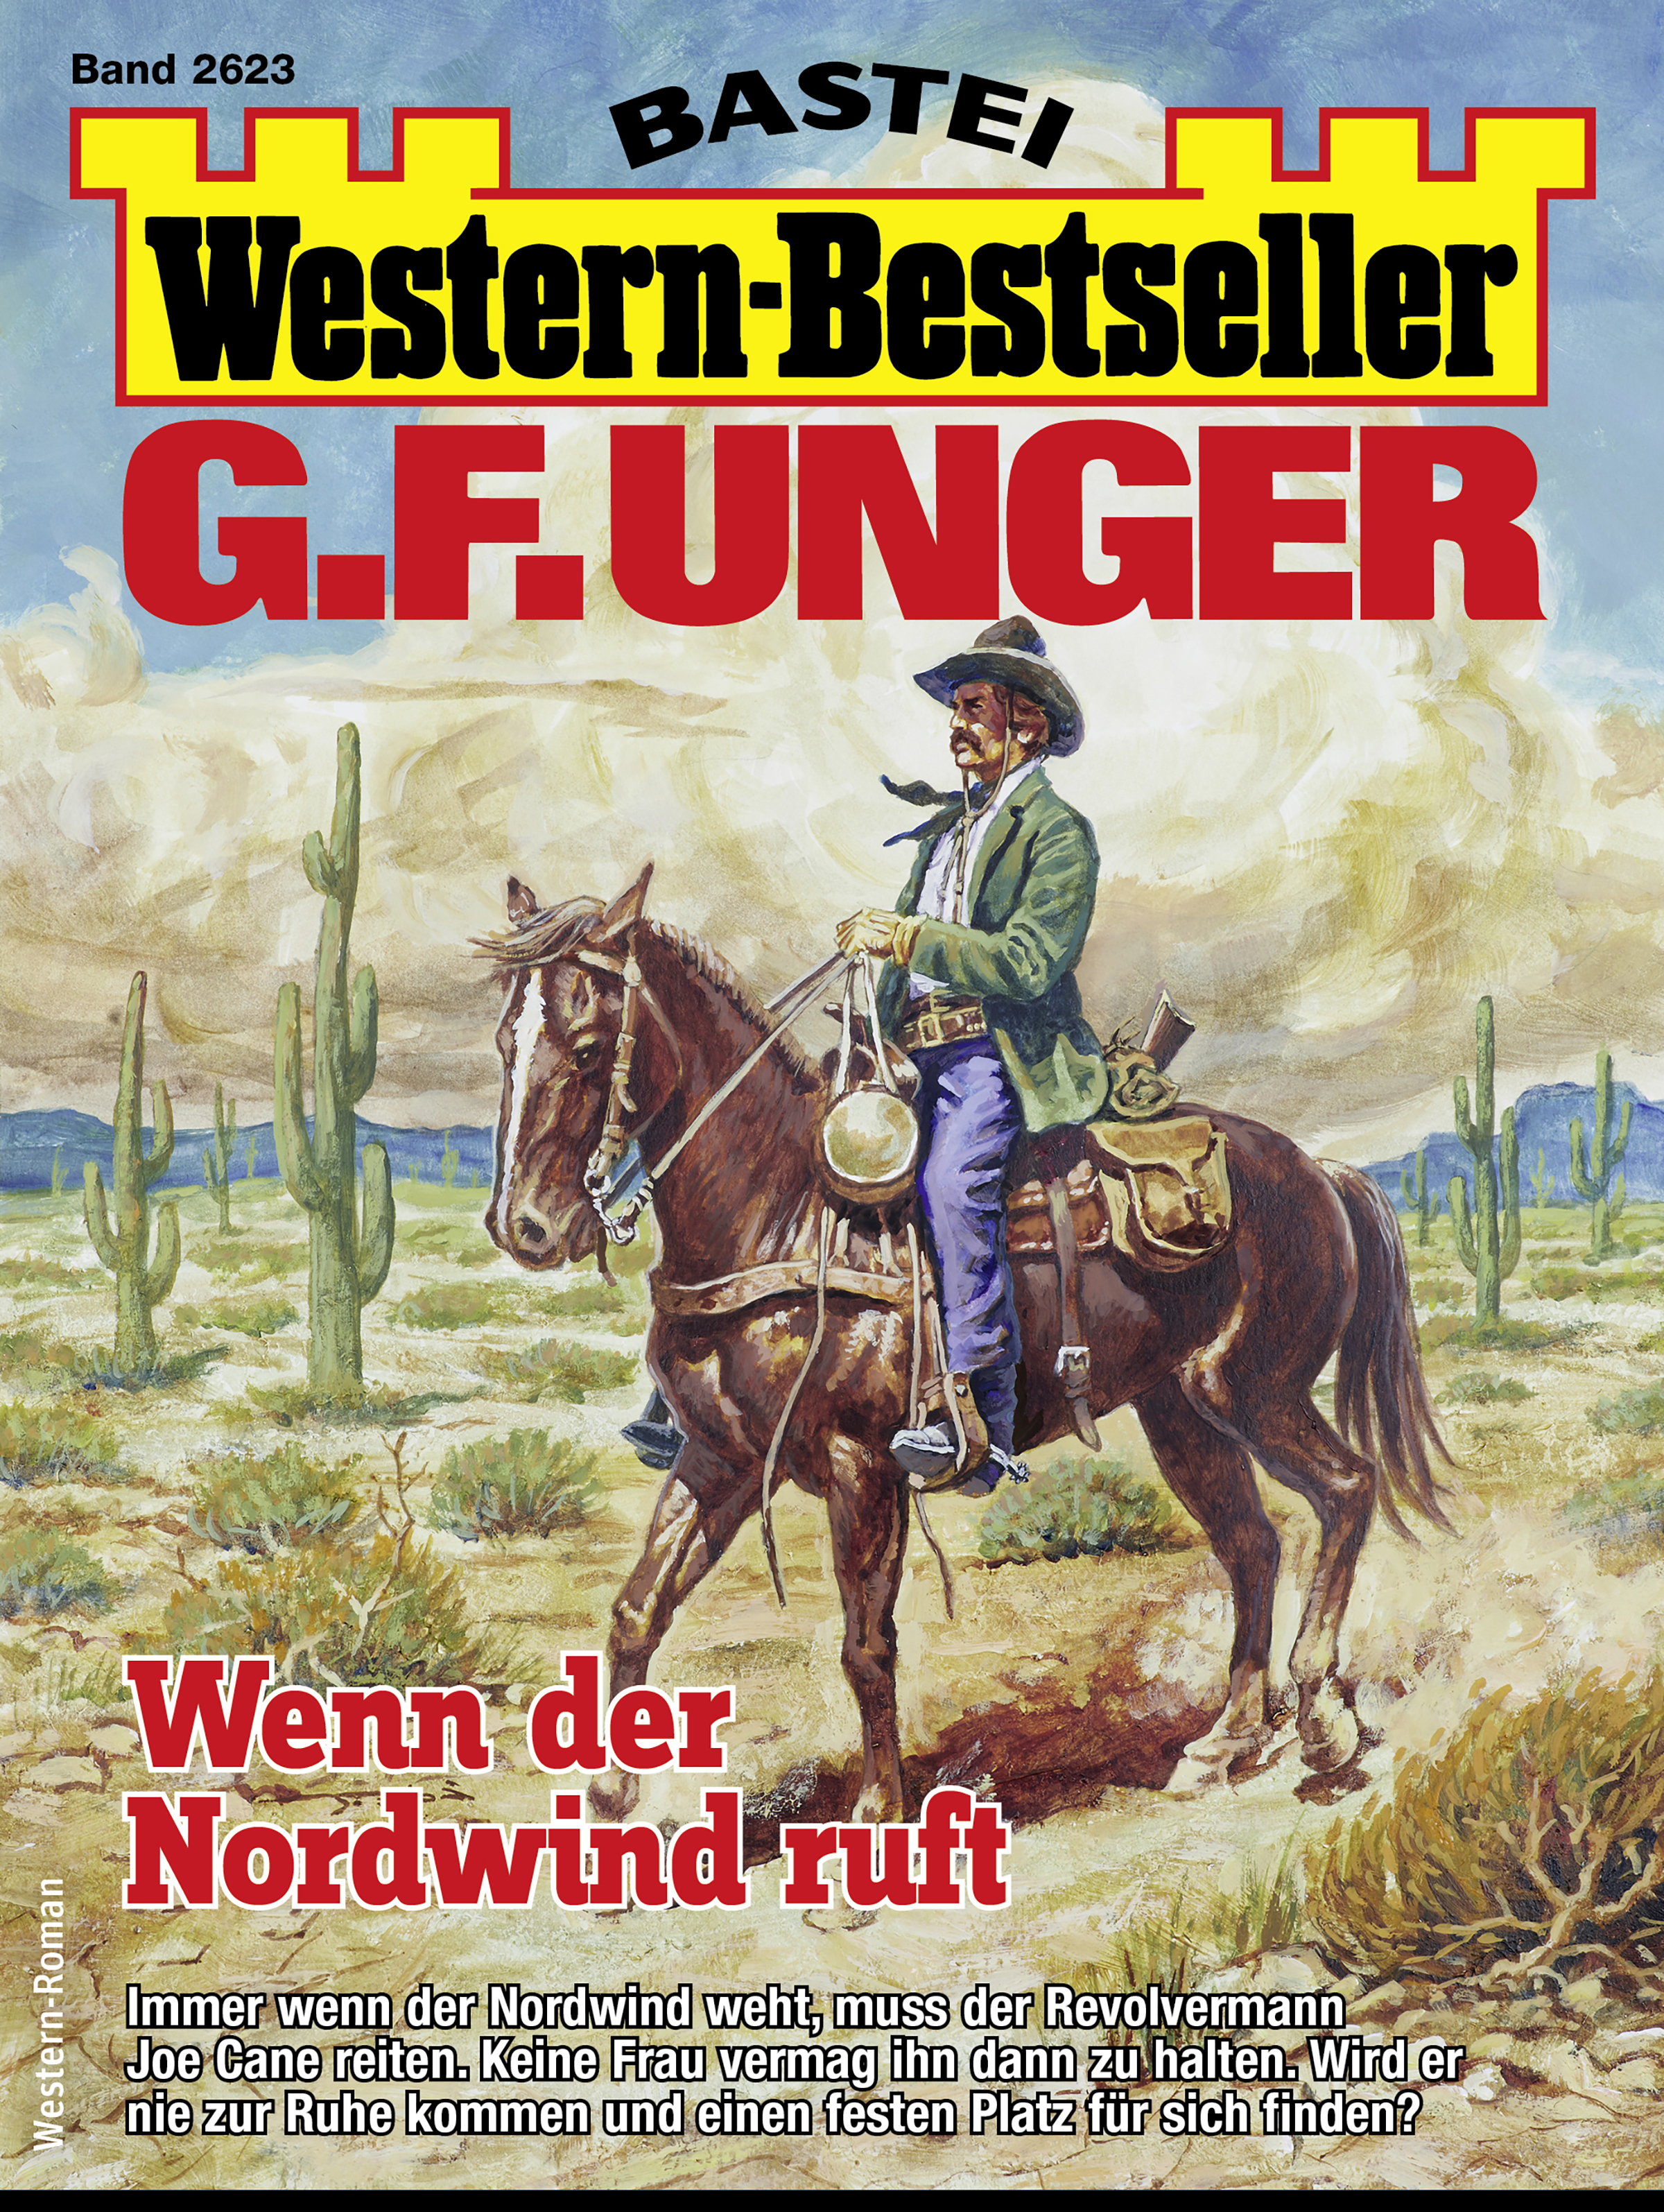 G. F. Unger Western-Bestseller 2623